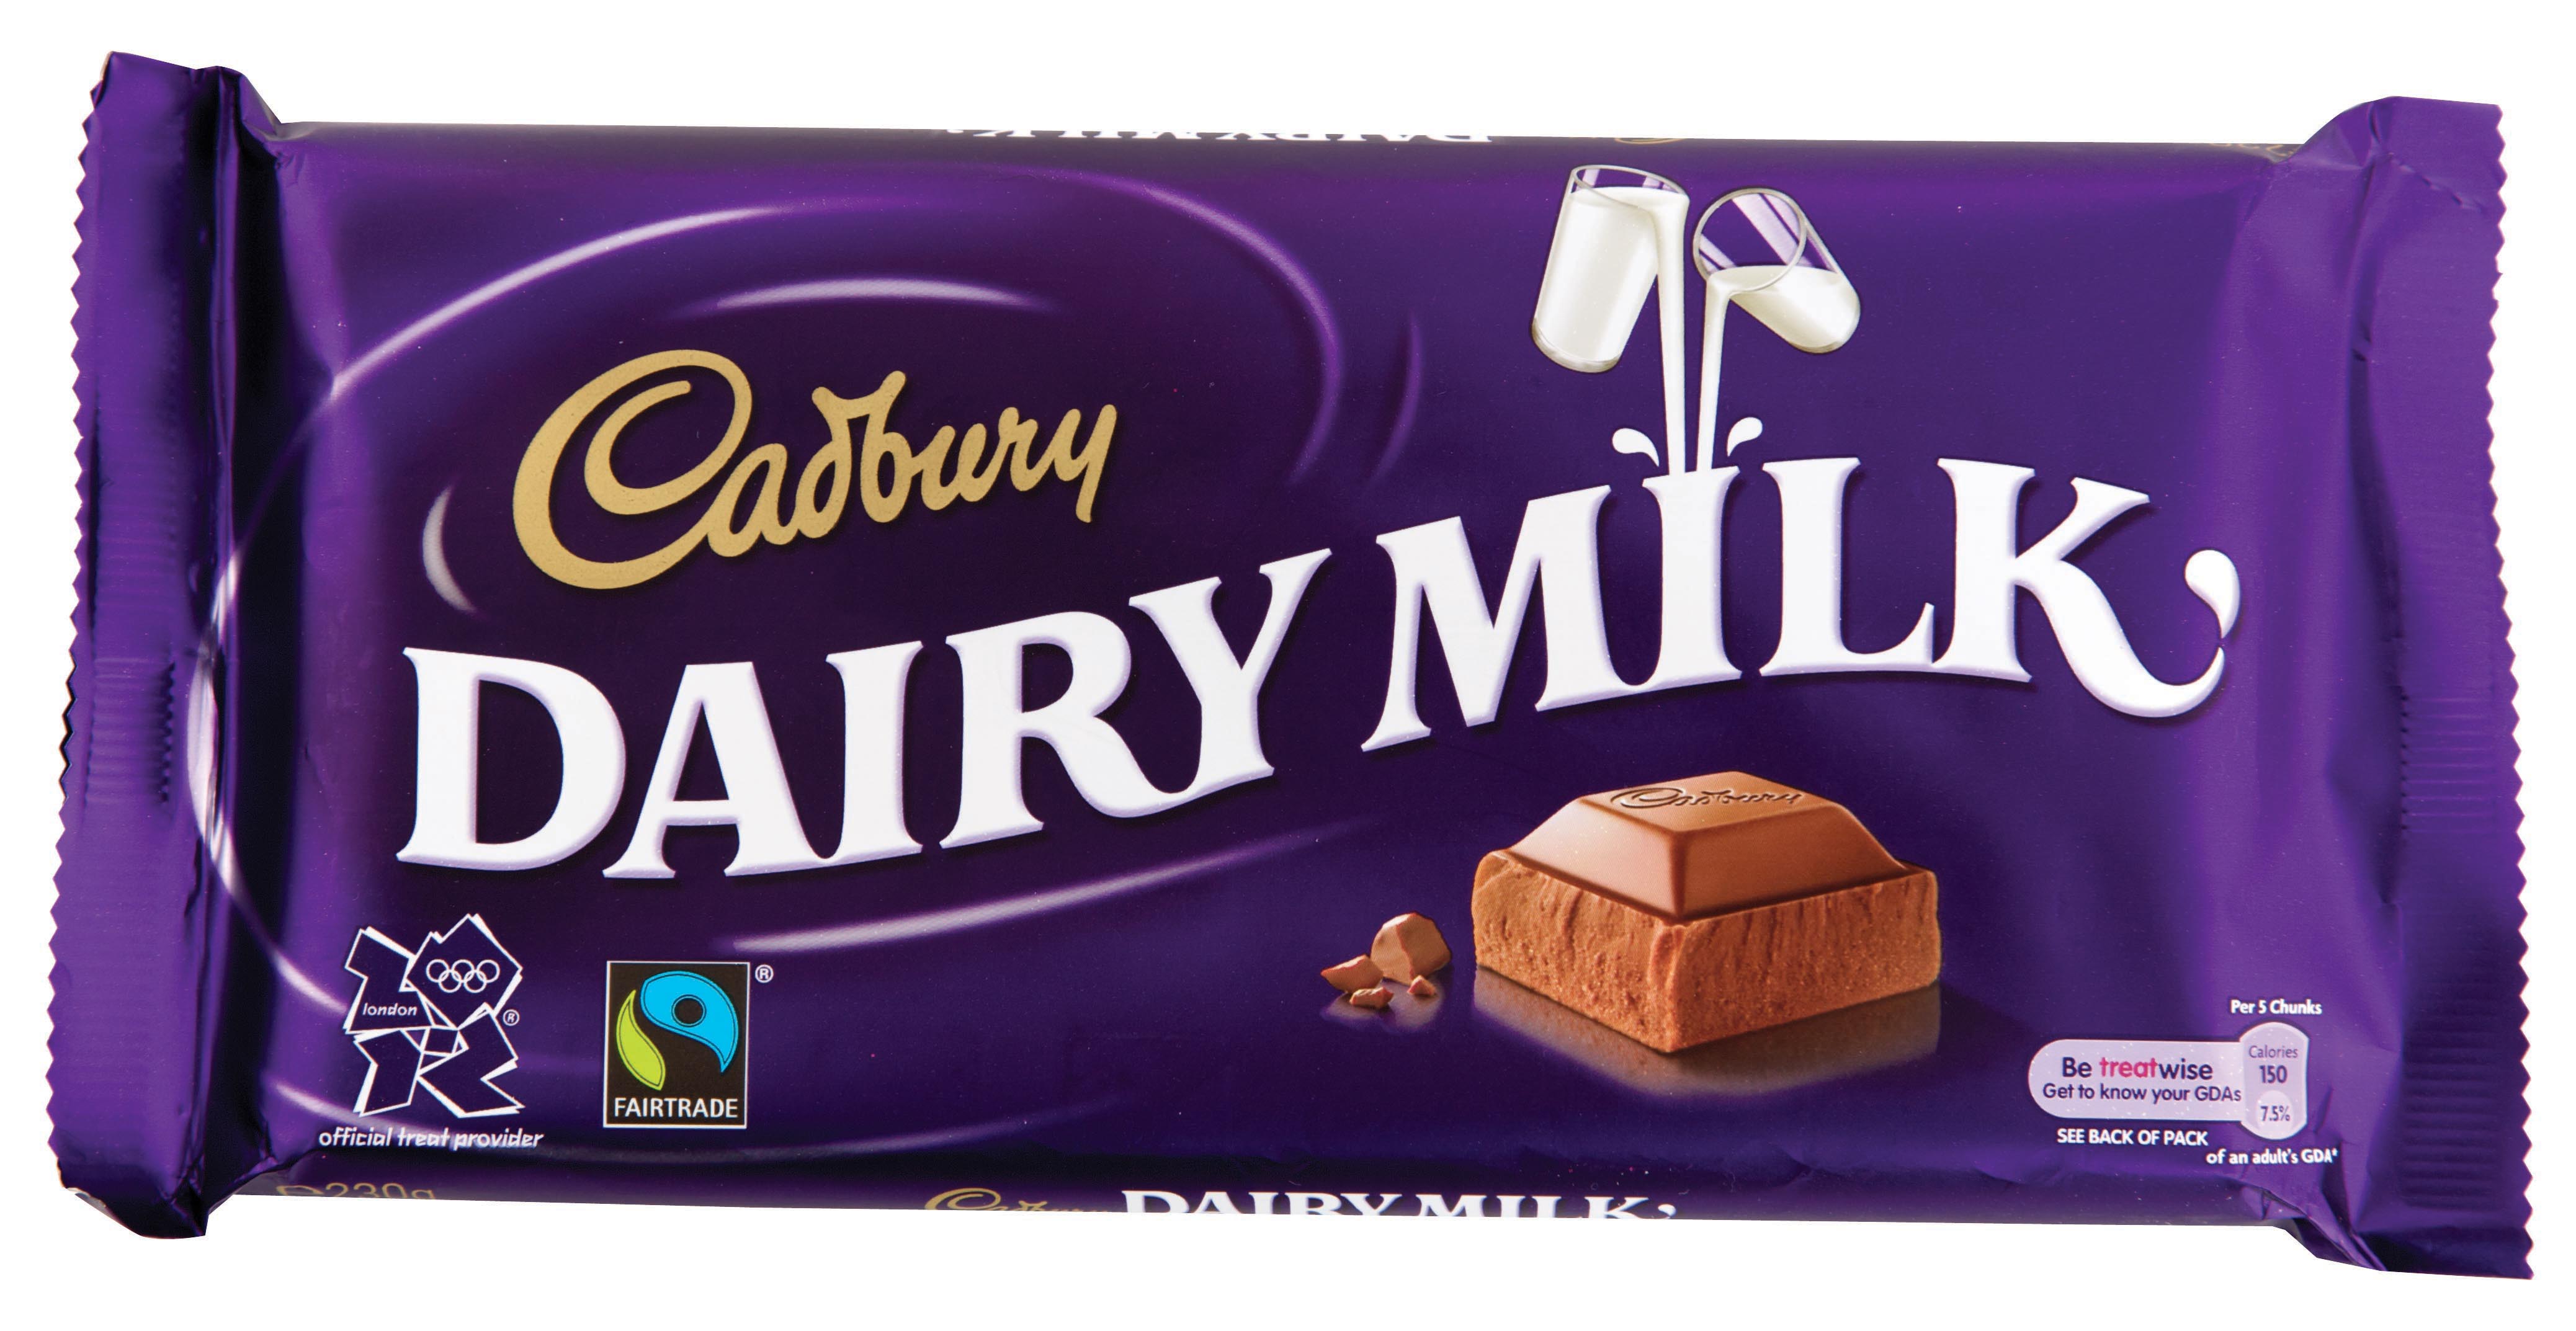 Cadbury Dairy Milk India